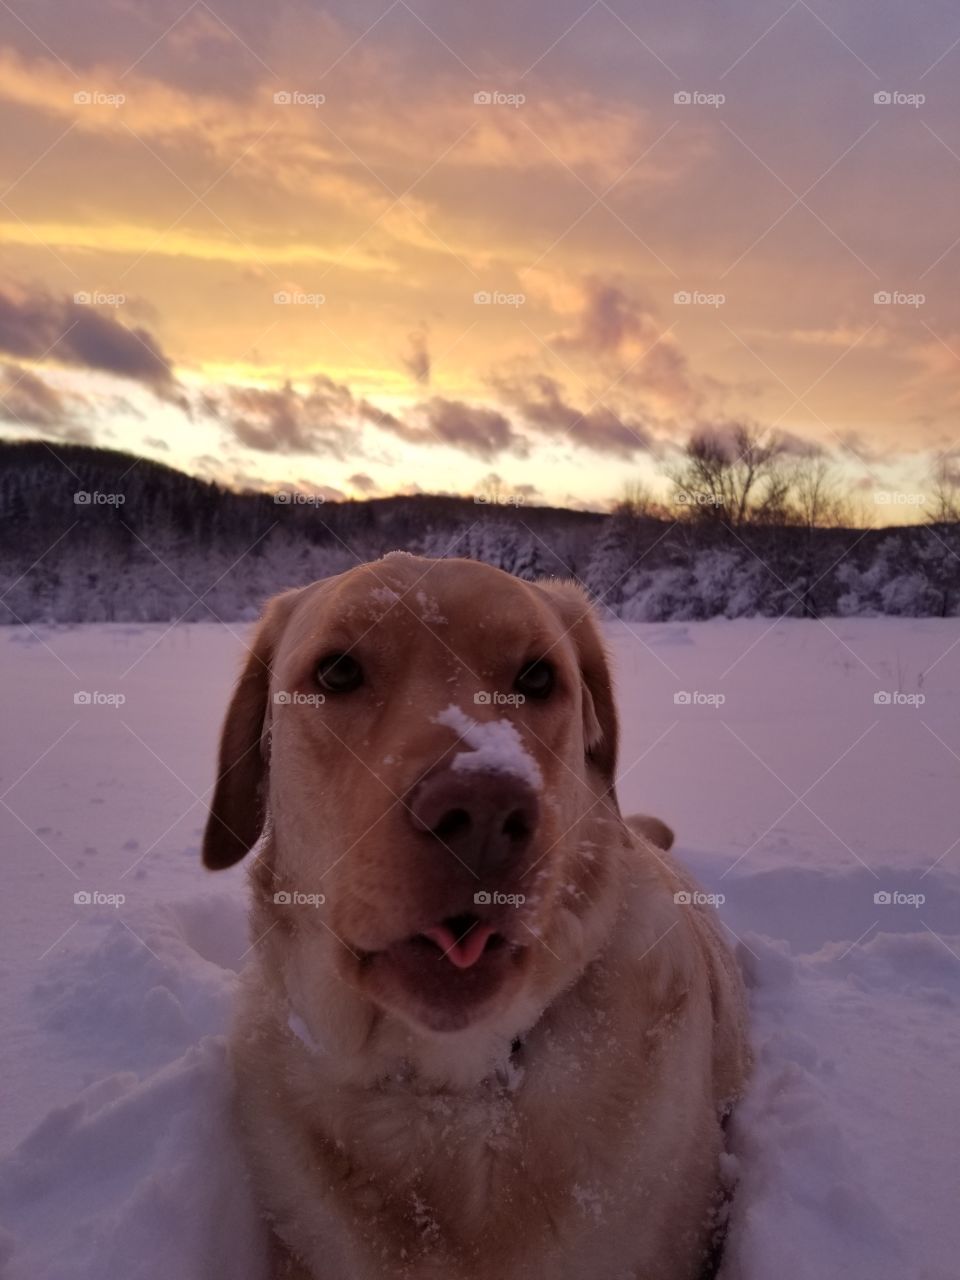 just a dog enjoying to sunset